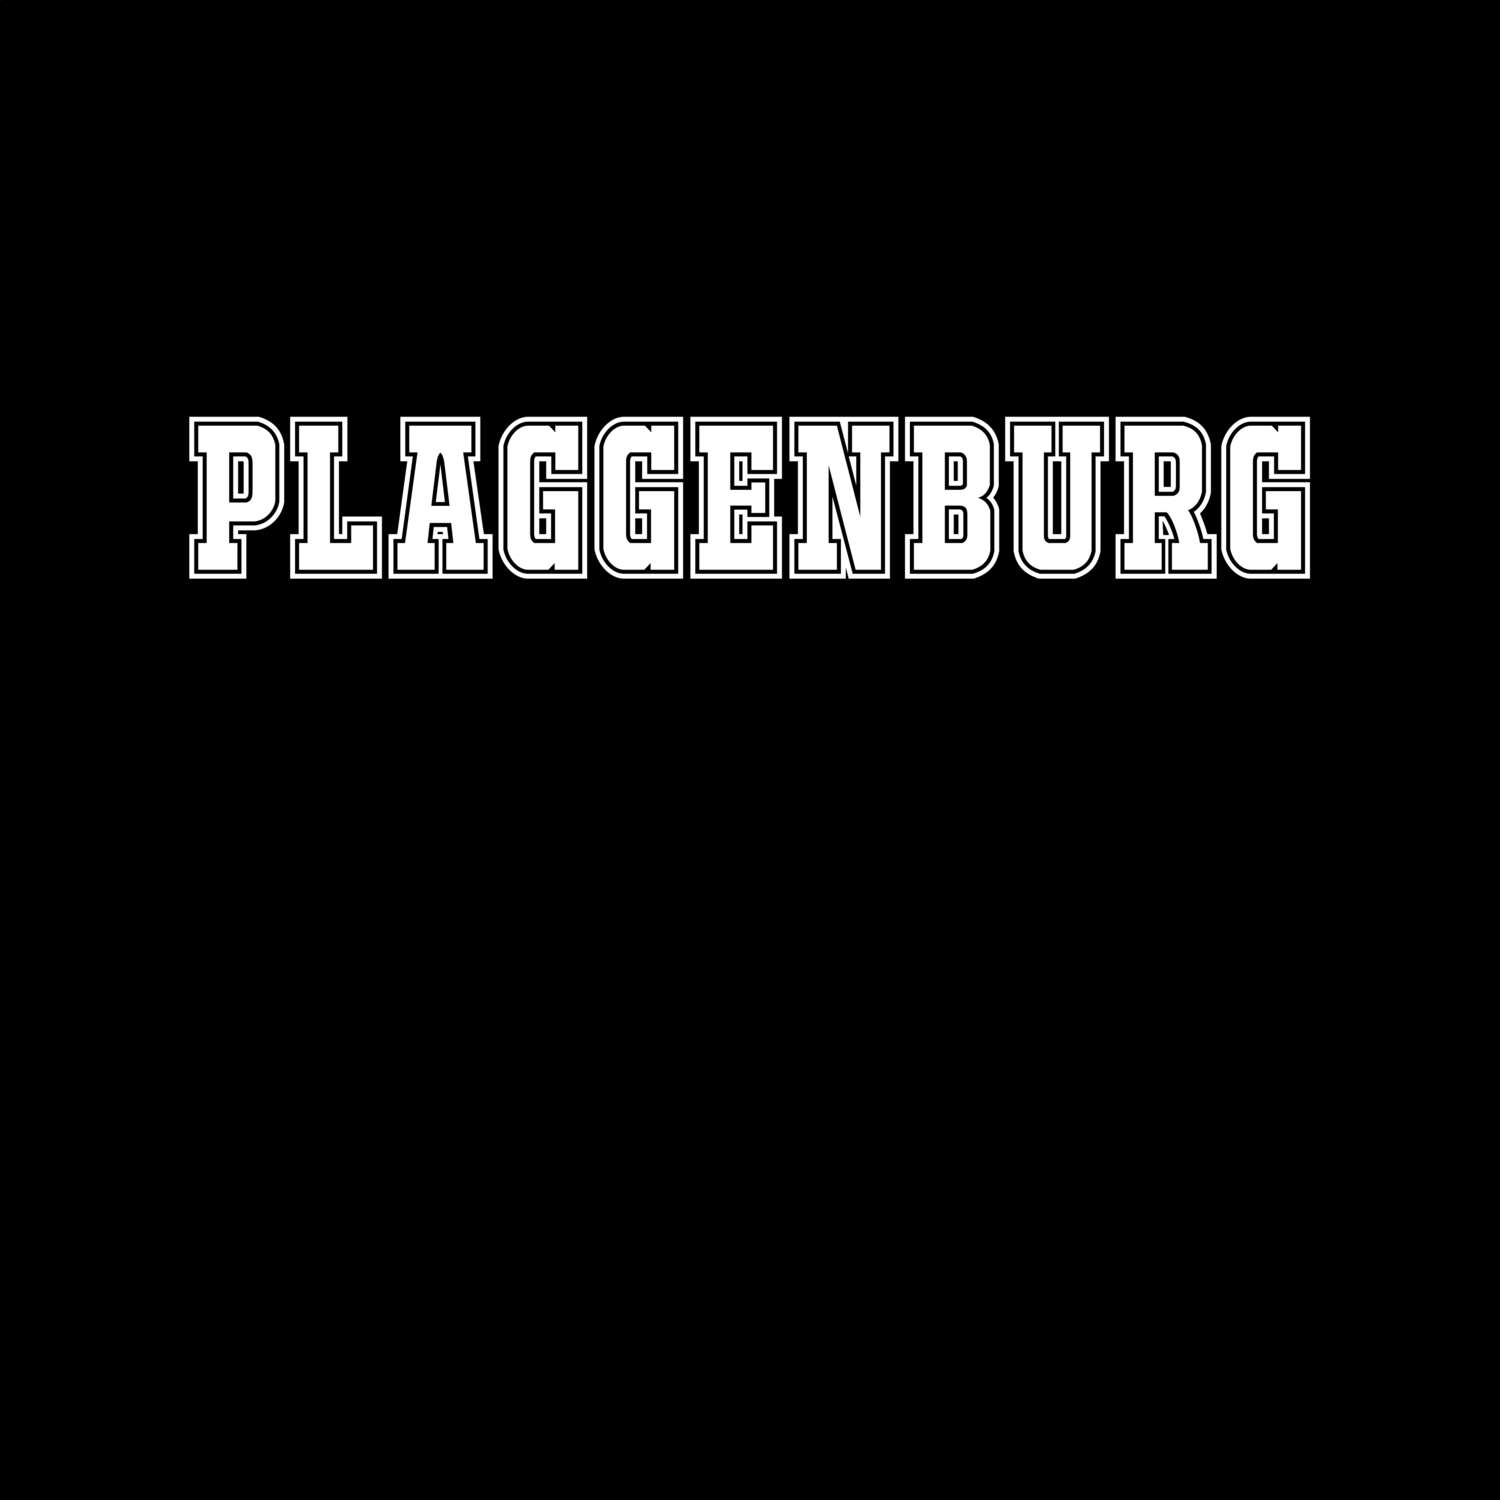 Plaggenburg T-Shirt »Classic«